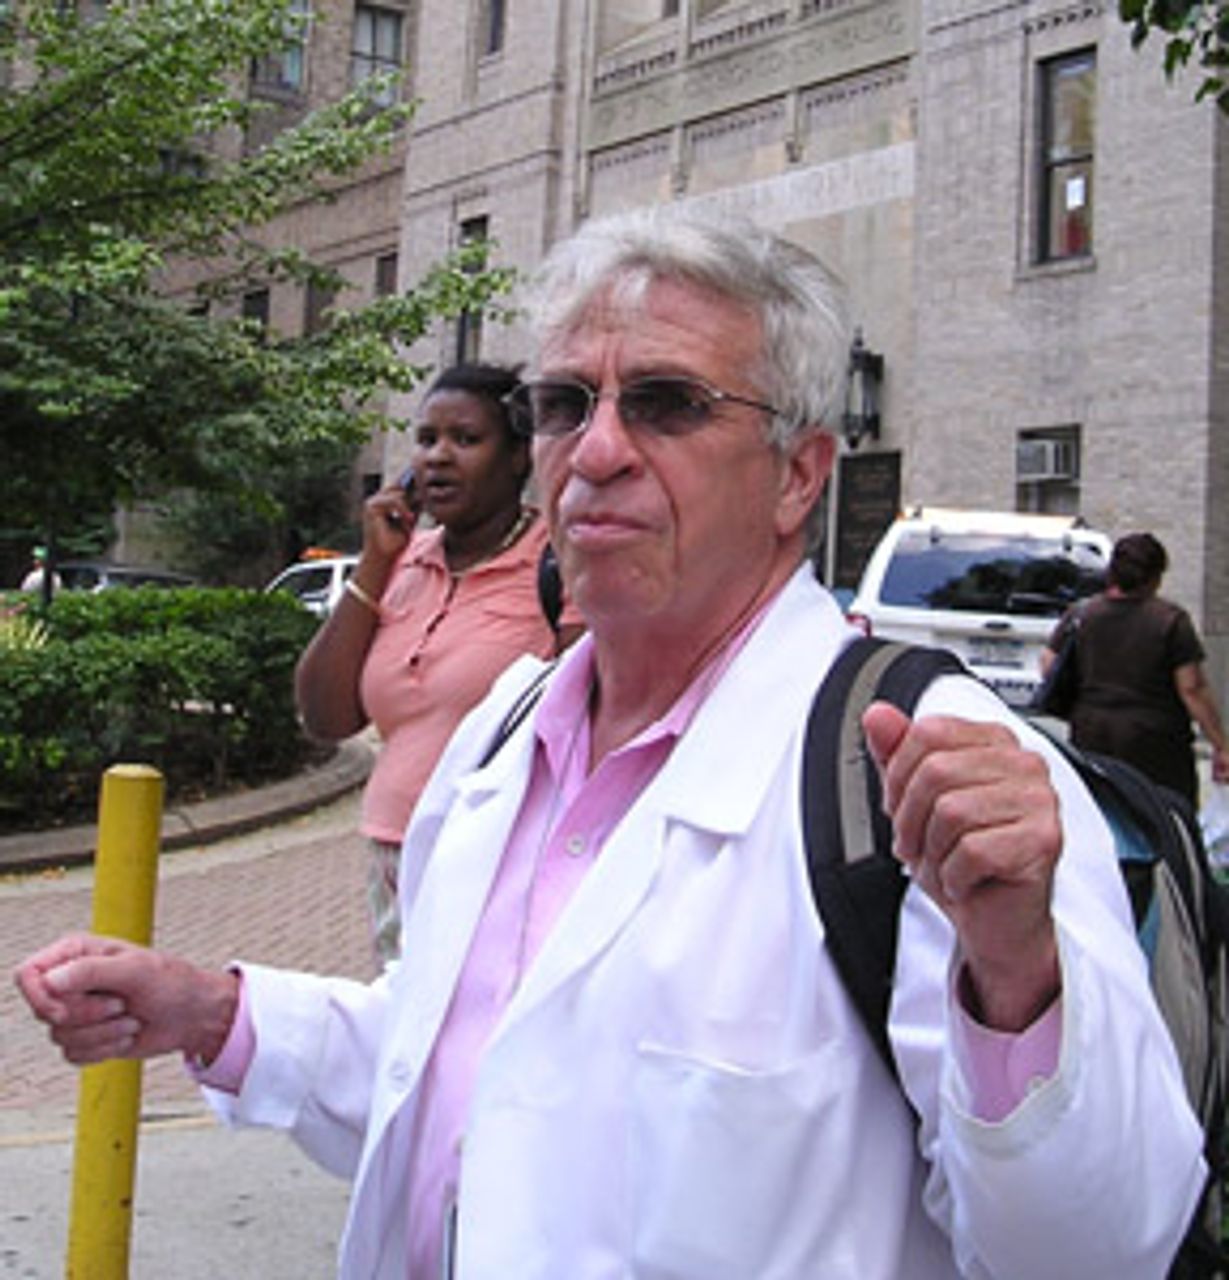 Dr. Michael Goldberg